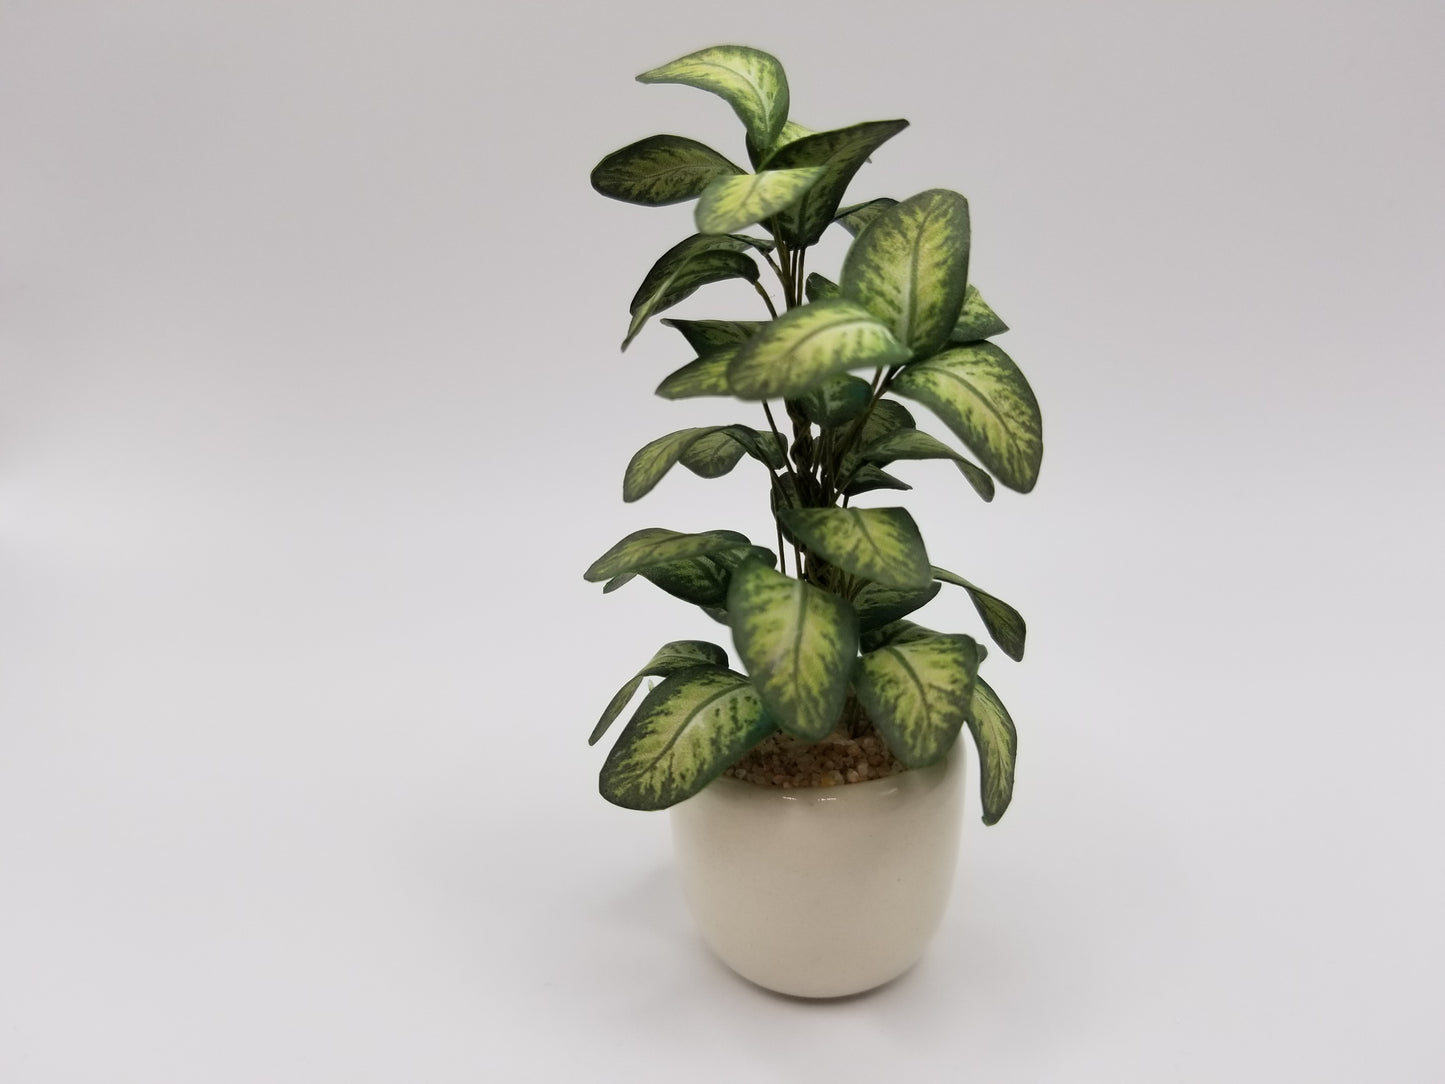 Dieffenbachia plant in glazed ceramic pot